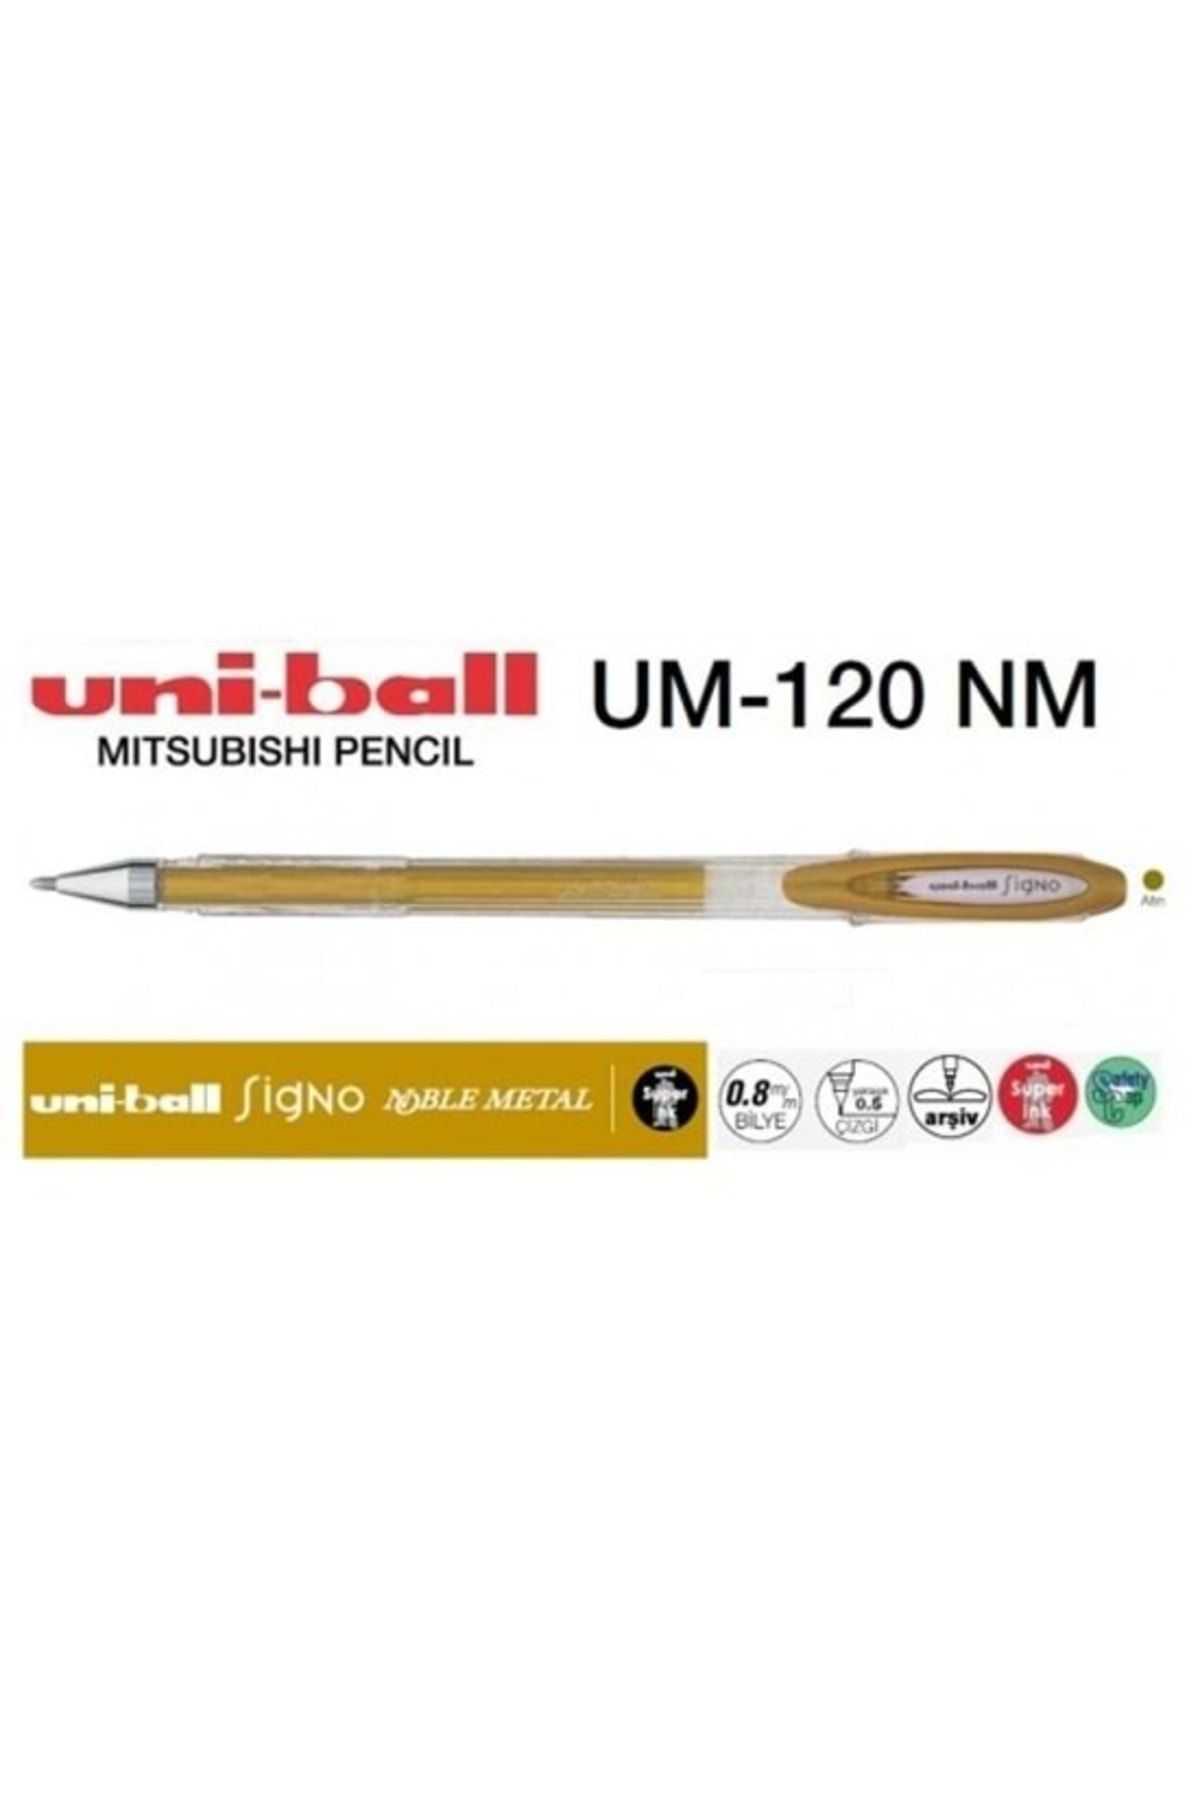 Uniball Signo Noble Metal 0.8